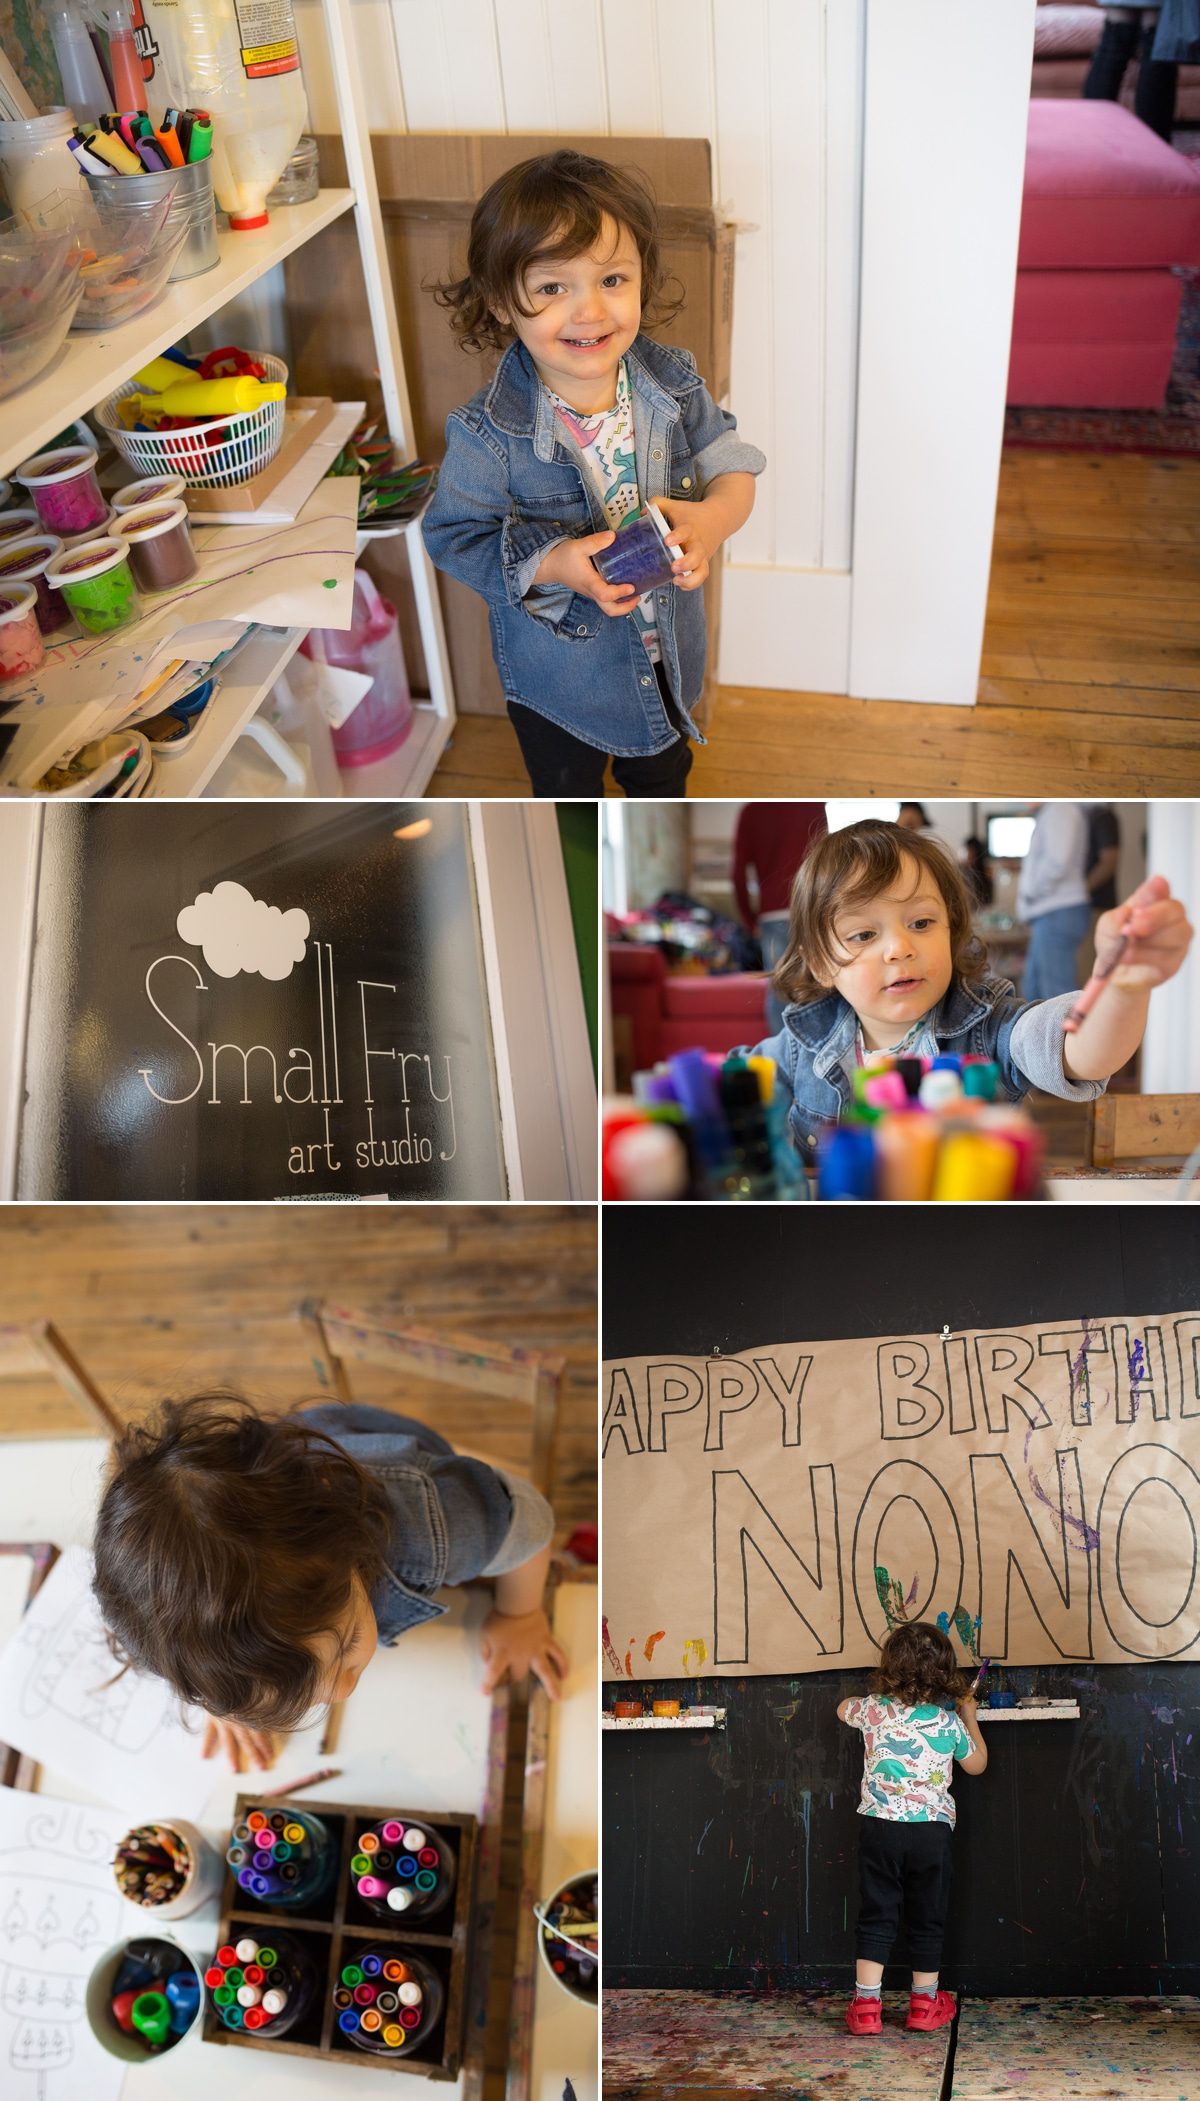 Small-Fry-art-studio-birthday-party